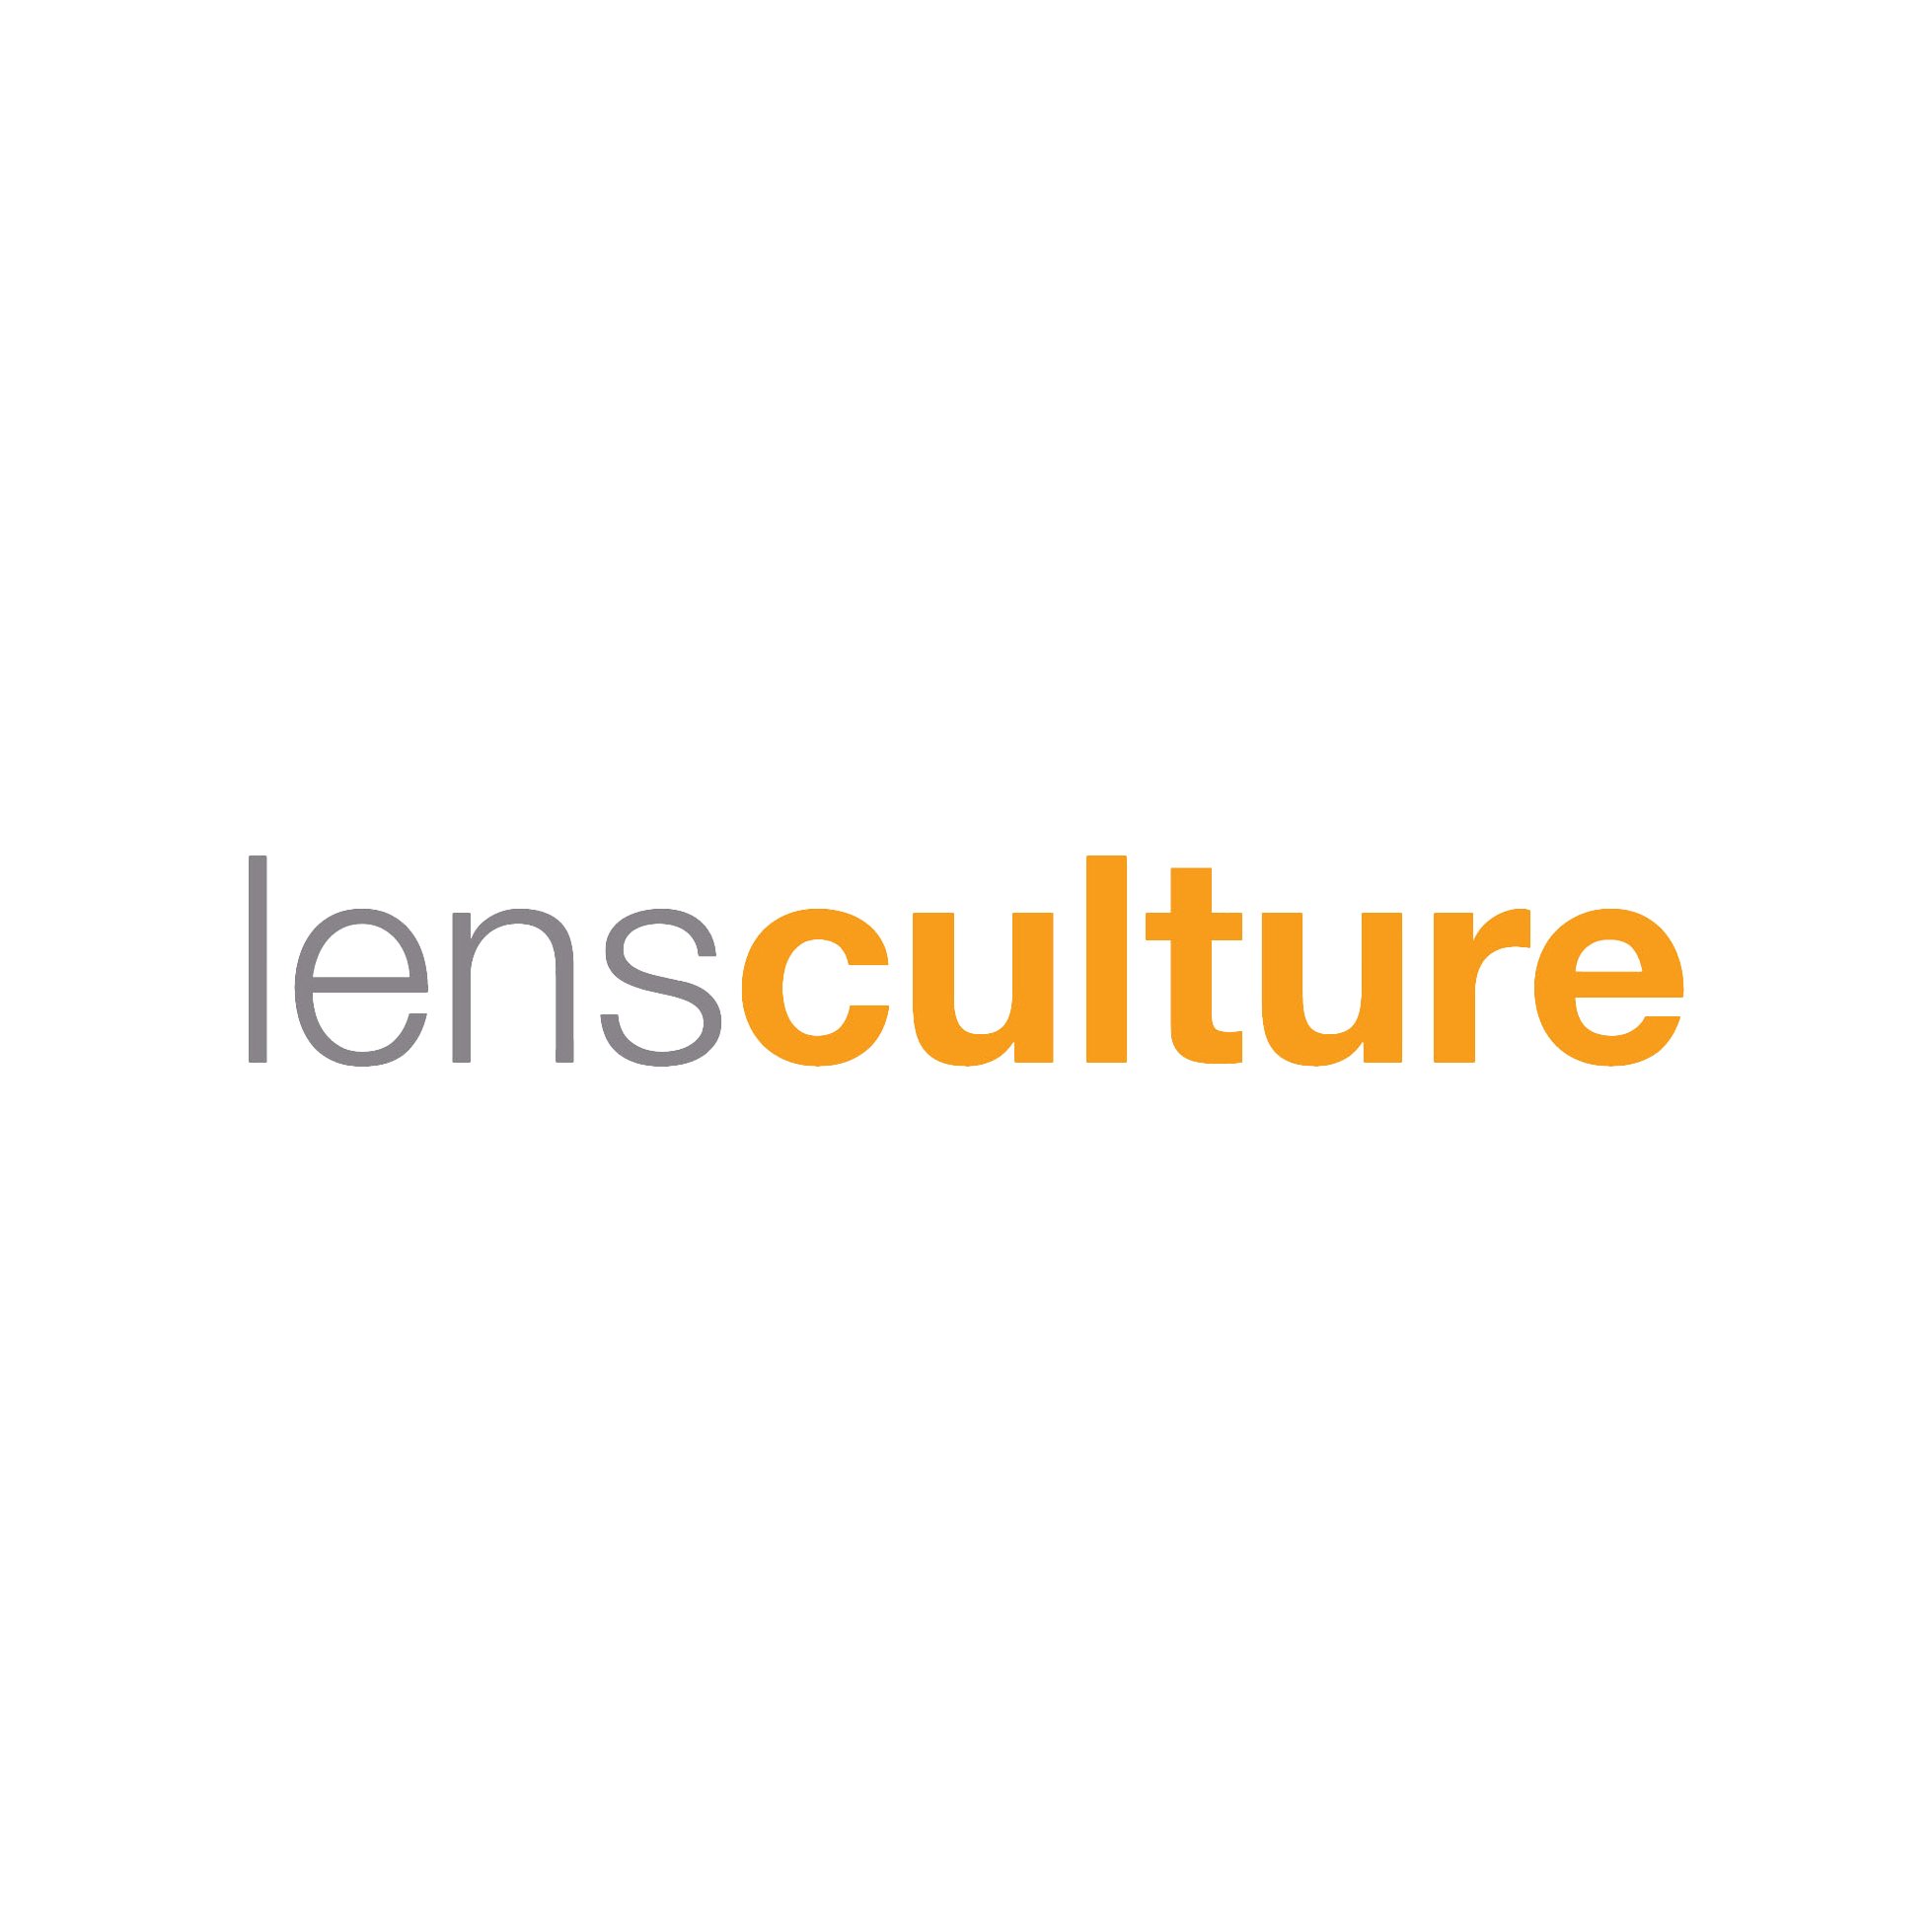 lensculture.jpg